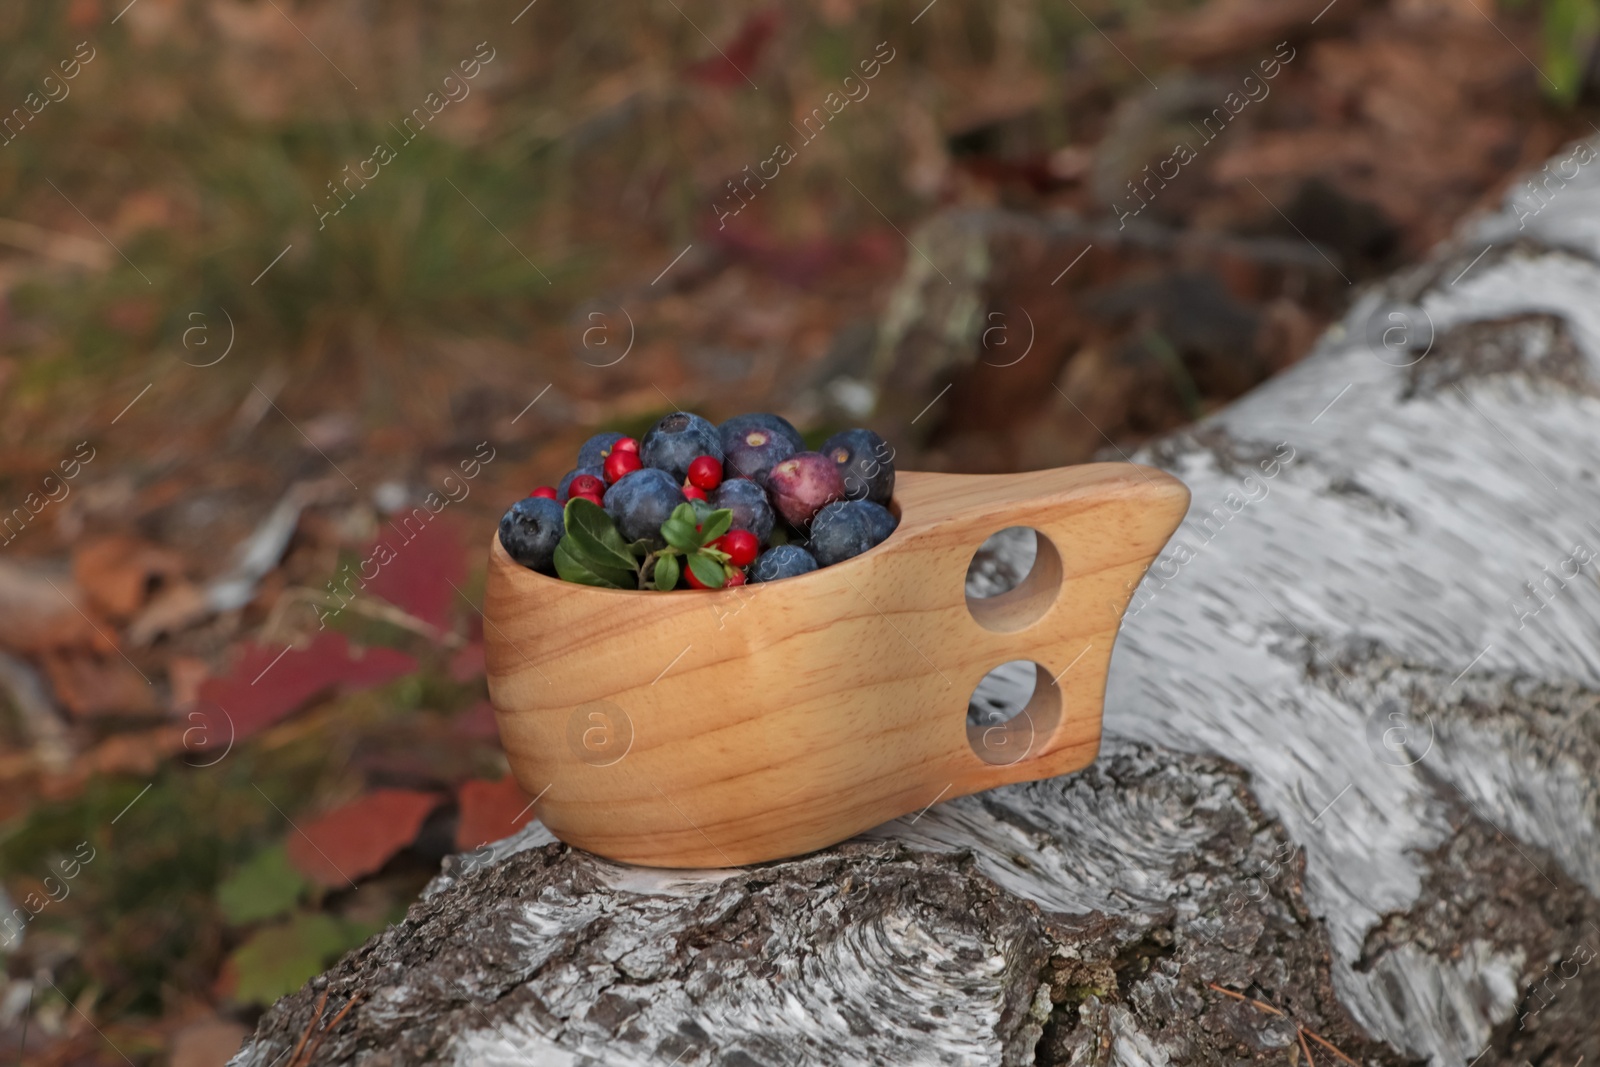 Photo of Wooden mug full of fresh ripe blueberries and lingonberries on log in forest